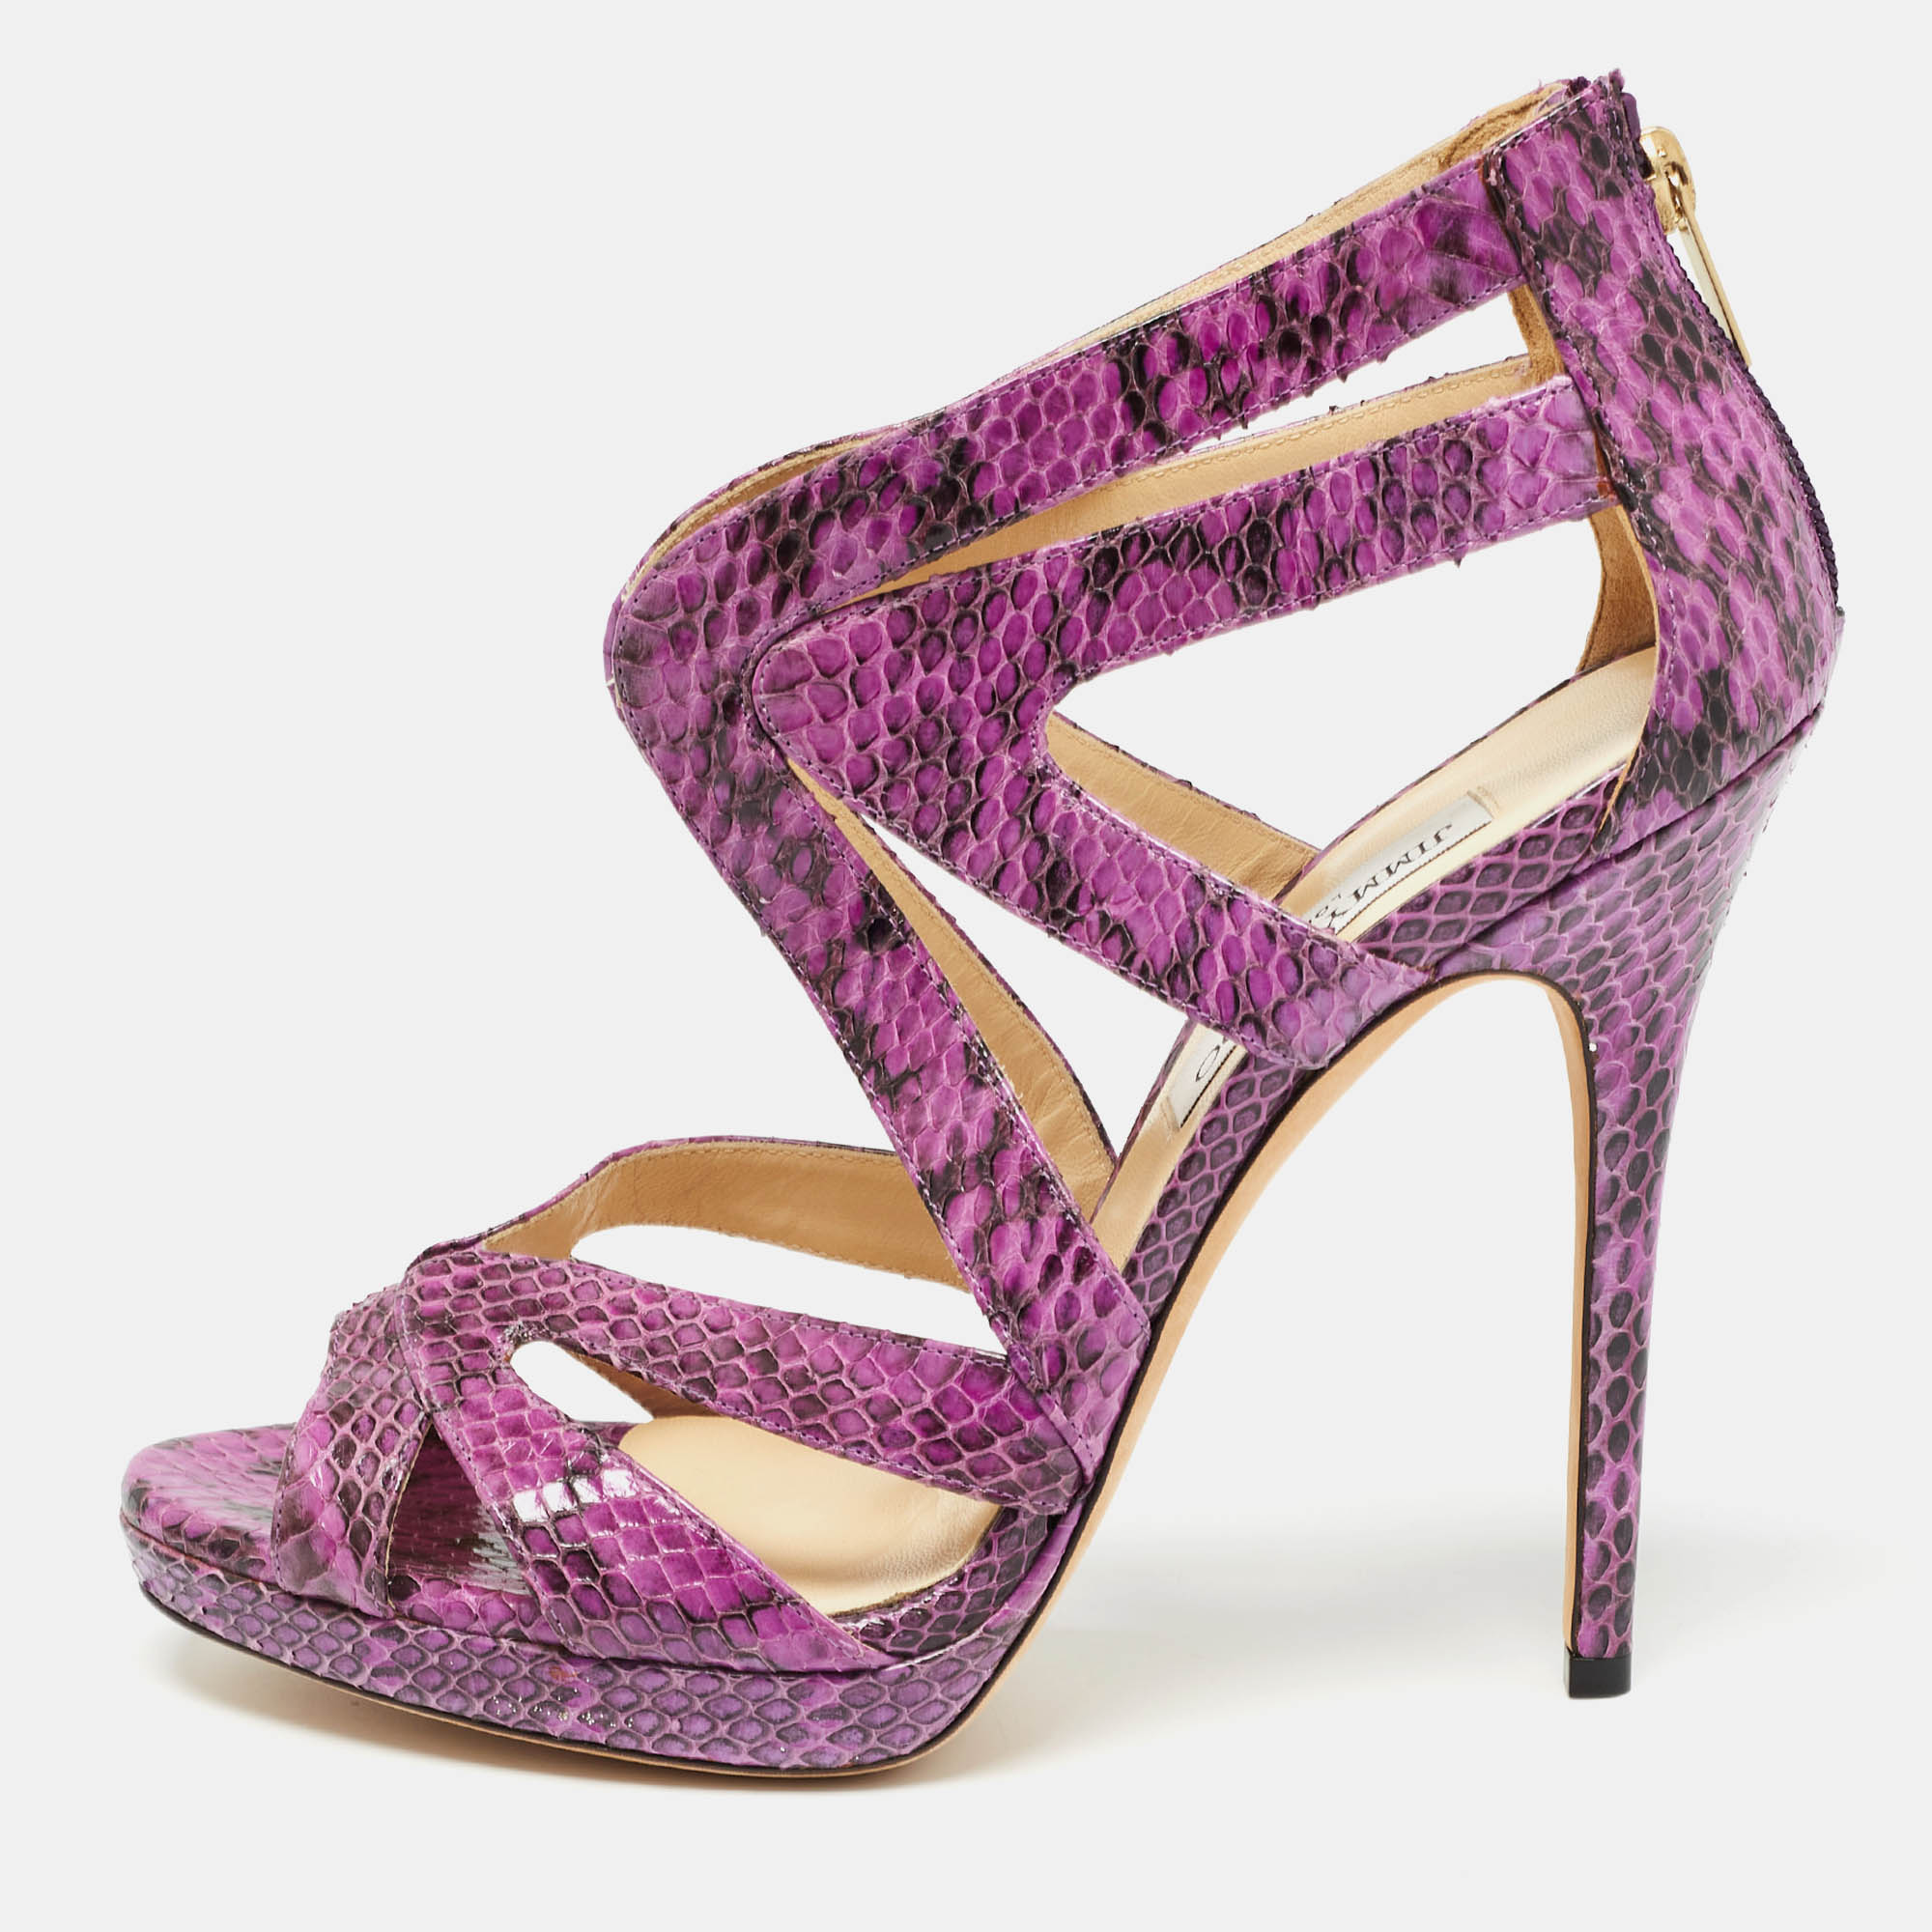 Jimmy choo purple watersnake  platform sandals size 41